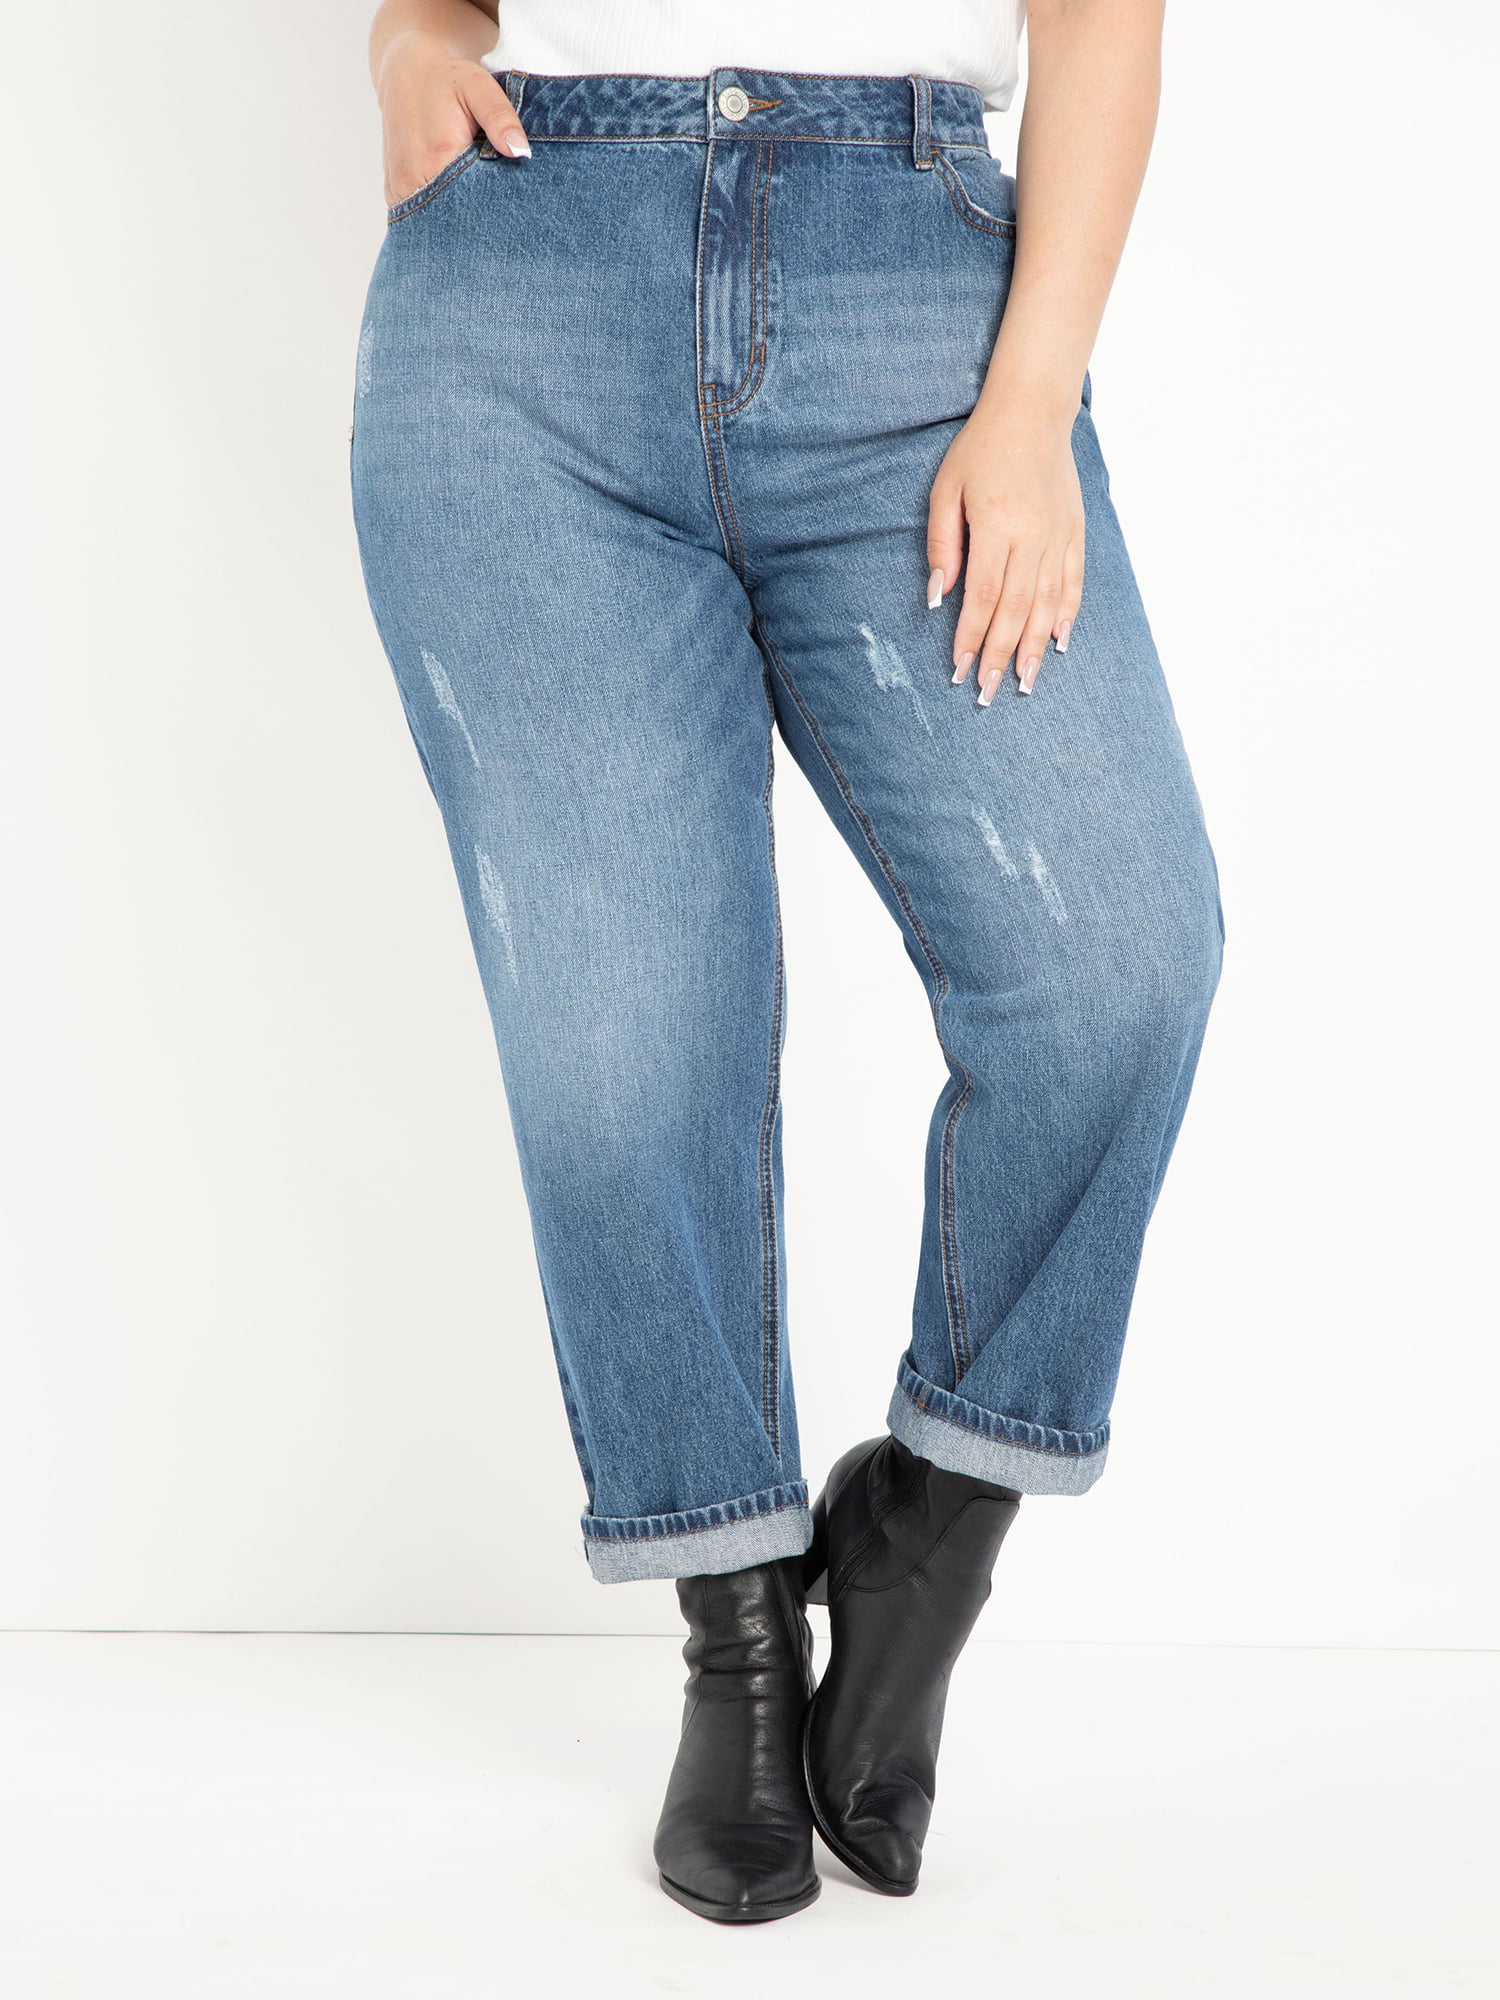 shopko plus size jeans